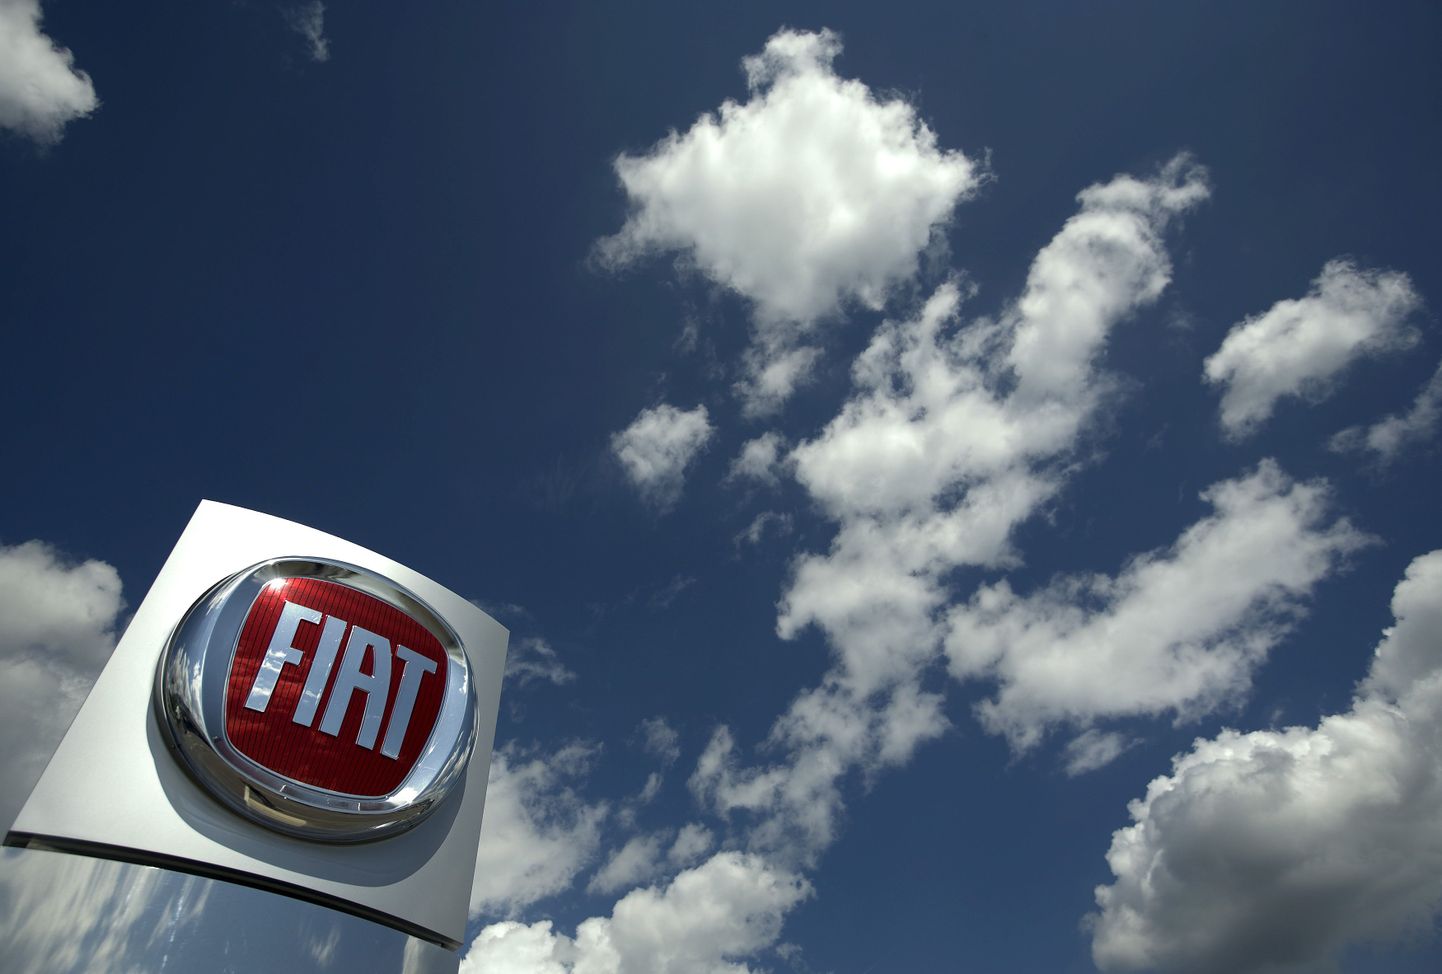 Логотип Fiat. Иллюстративное фото.